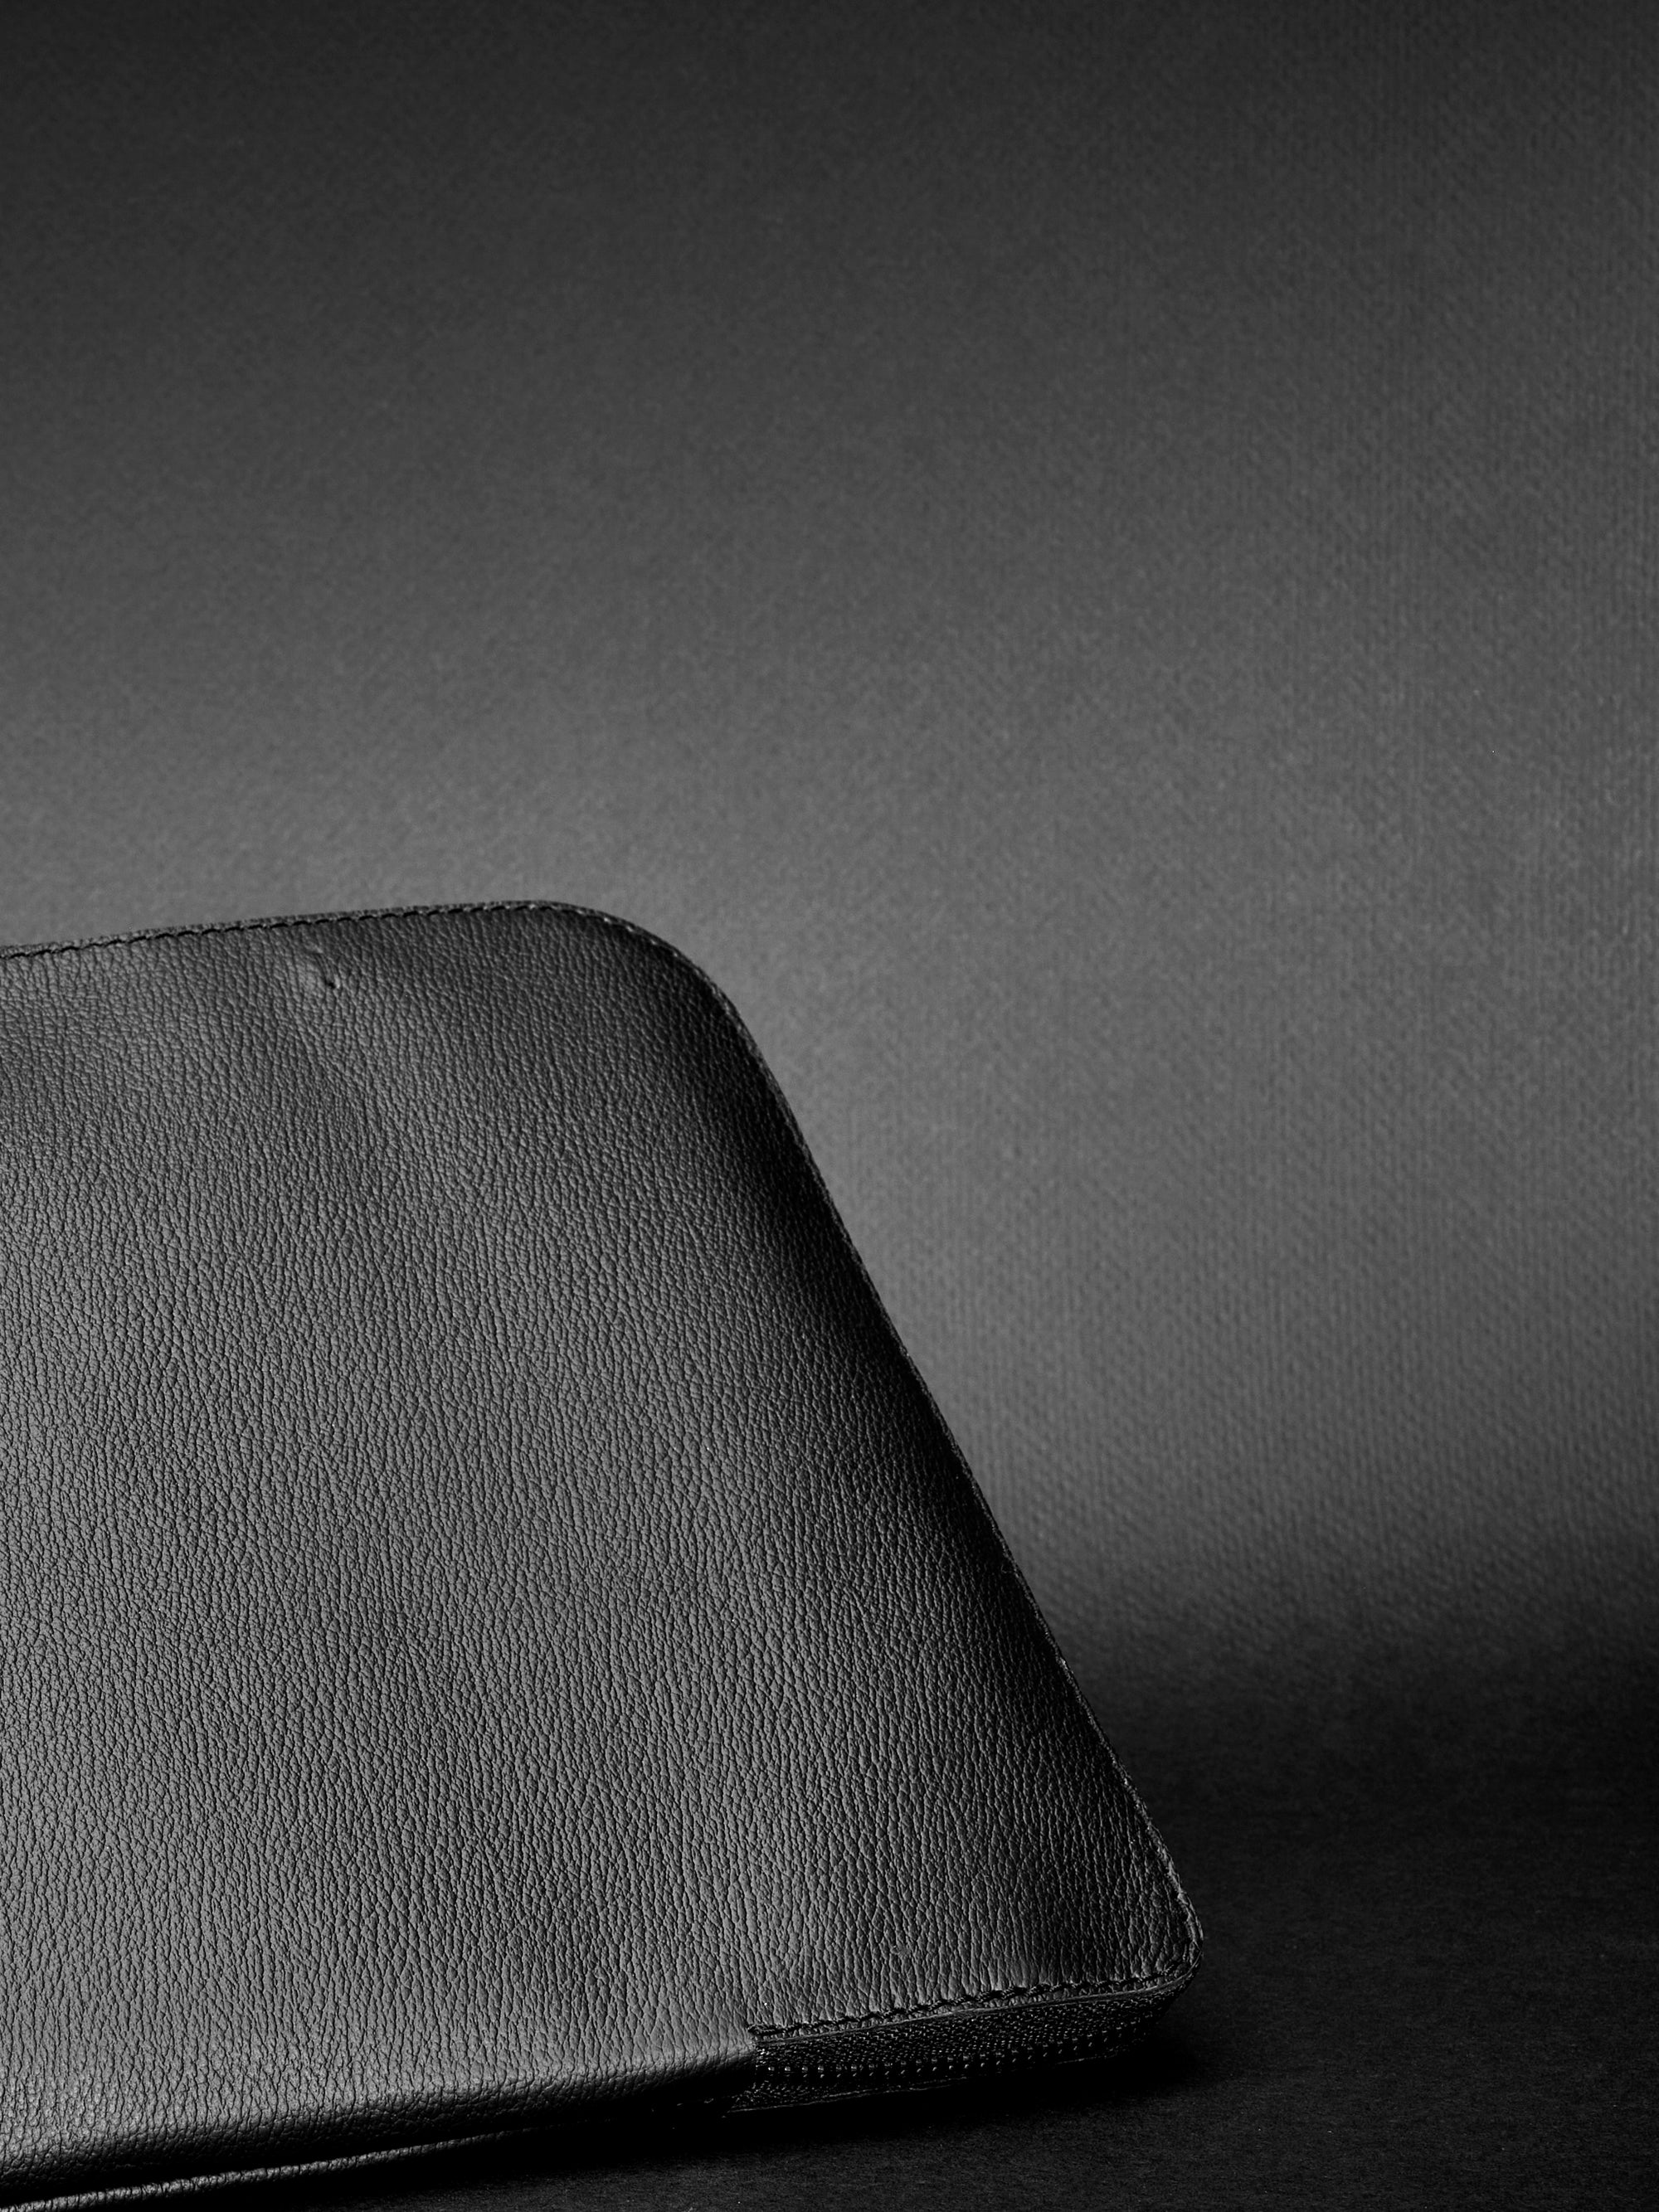 Full grain leather. Draftsman 6 iPad Case Black, iPad Pro 11-inch, iPad Pro 12.9-inch, M1 Chip by Capra Leather